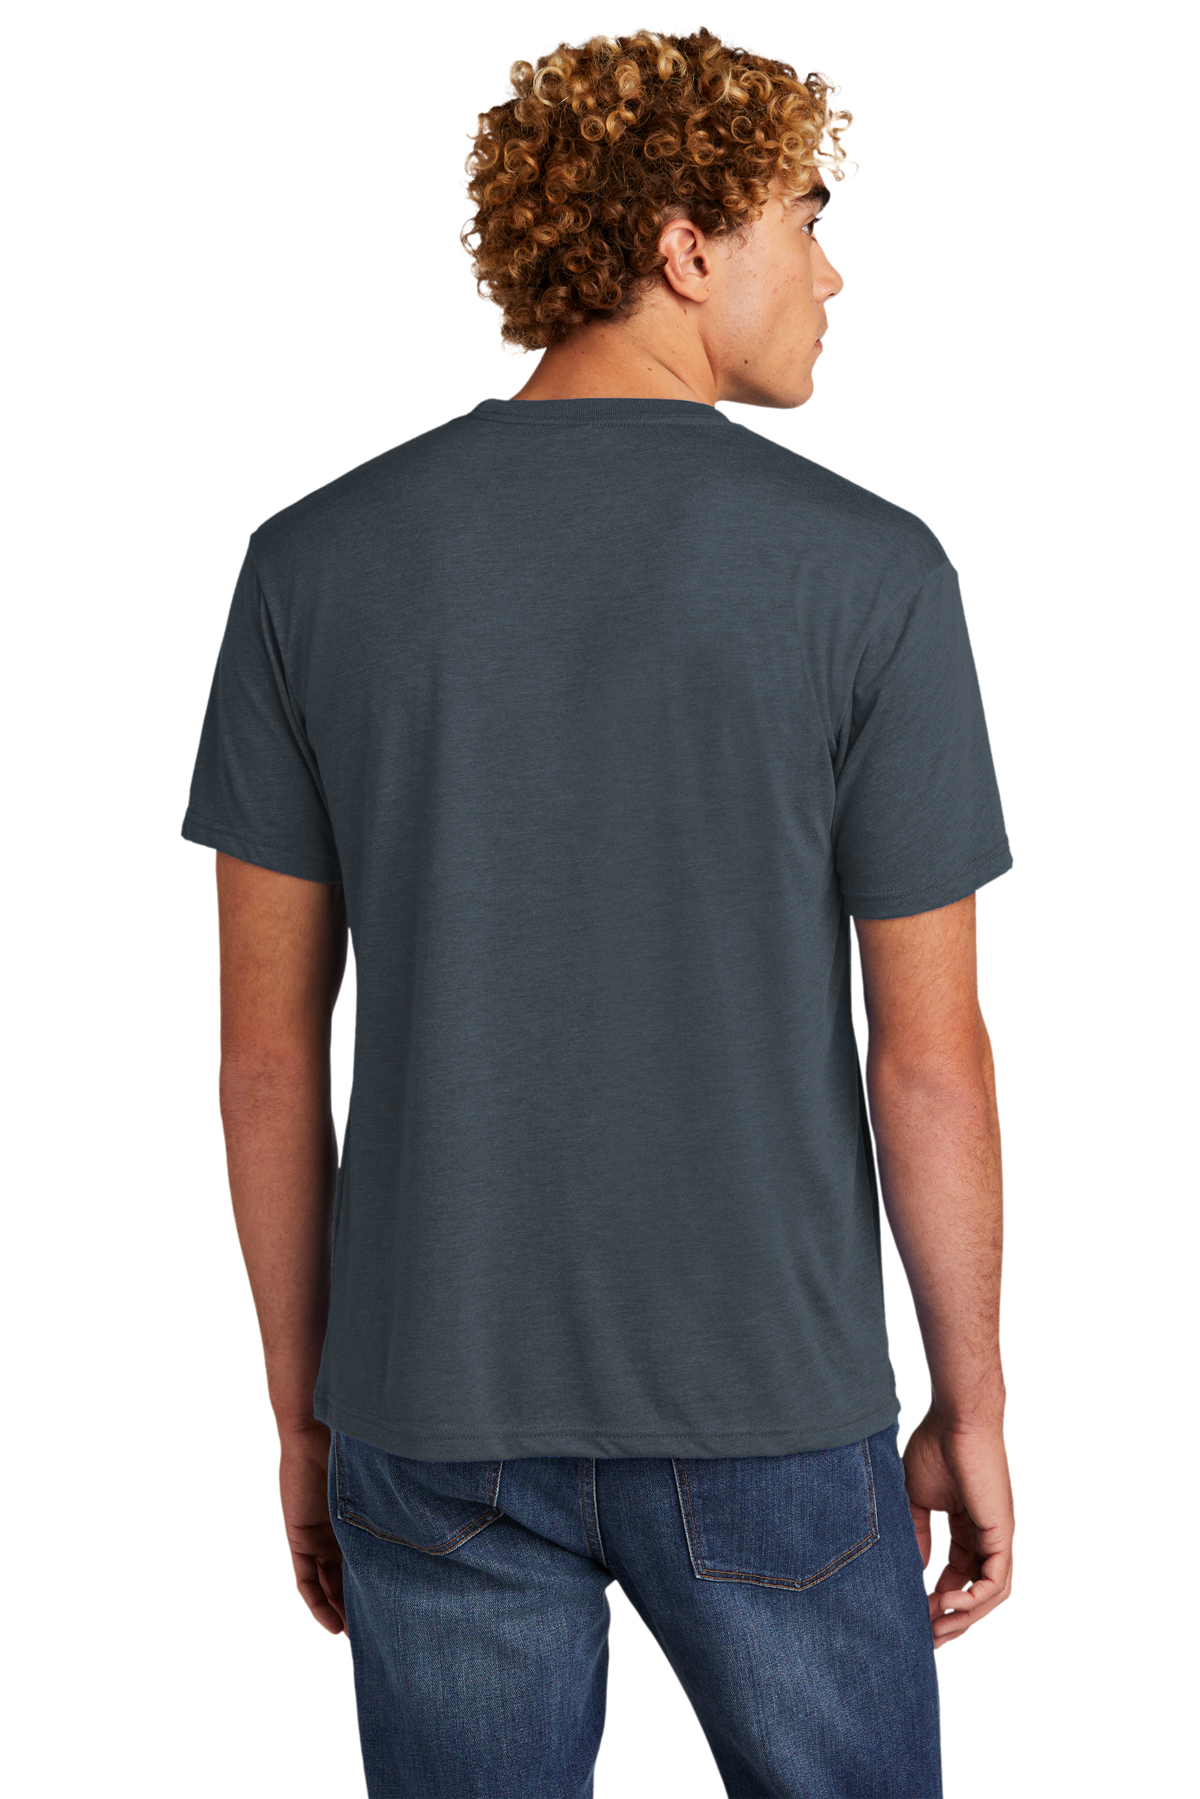 Next Level 6010 Unisex T-Shirt Short Sleeve Tri-Blend Crew